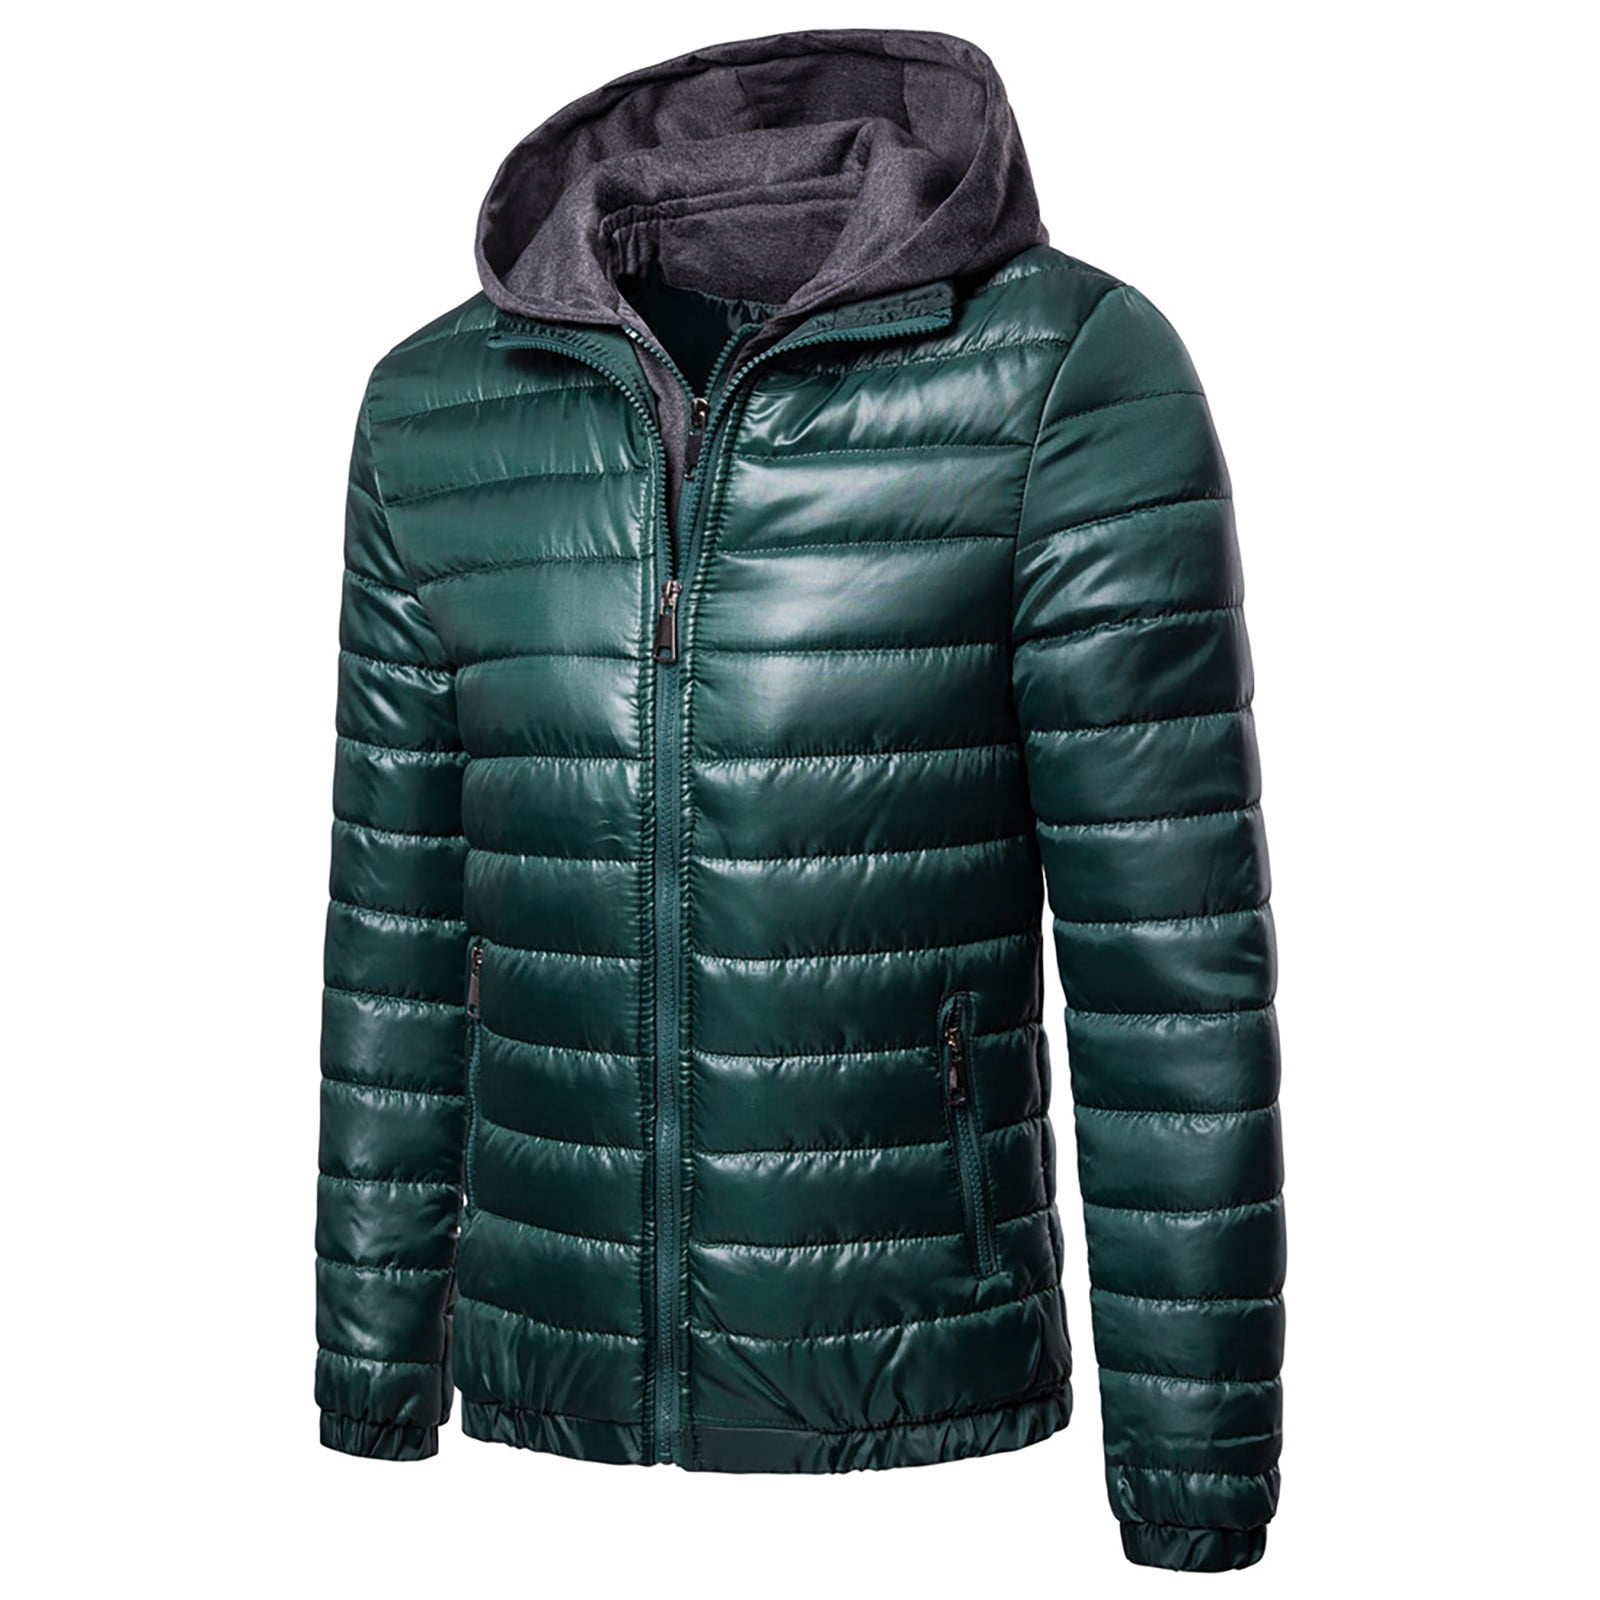 JSGEK Sales Men's Lightweight Packable Hooded Down Jacket Solid